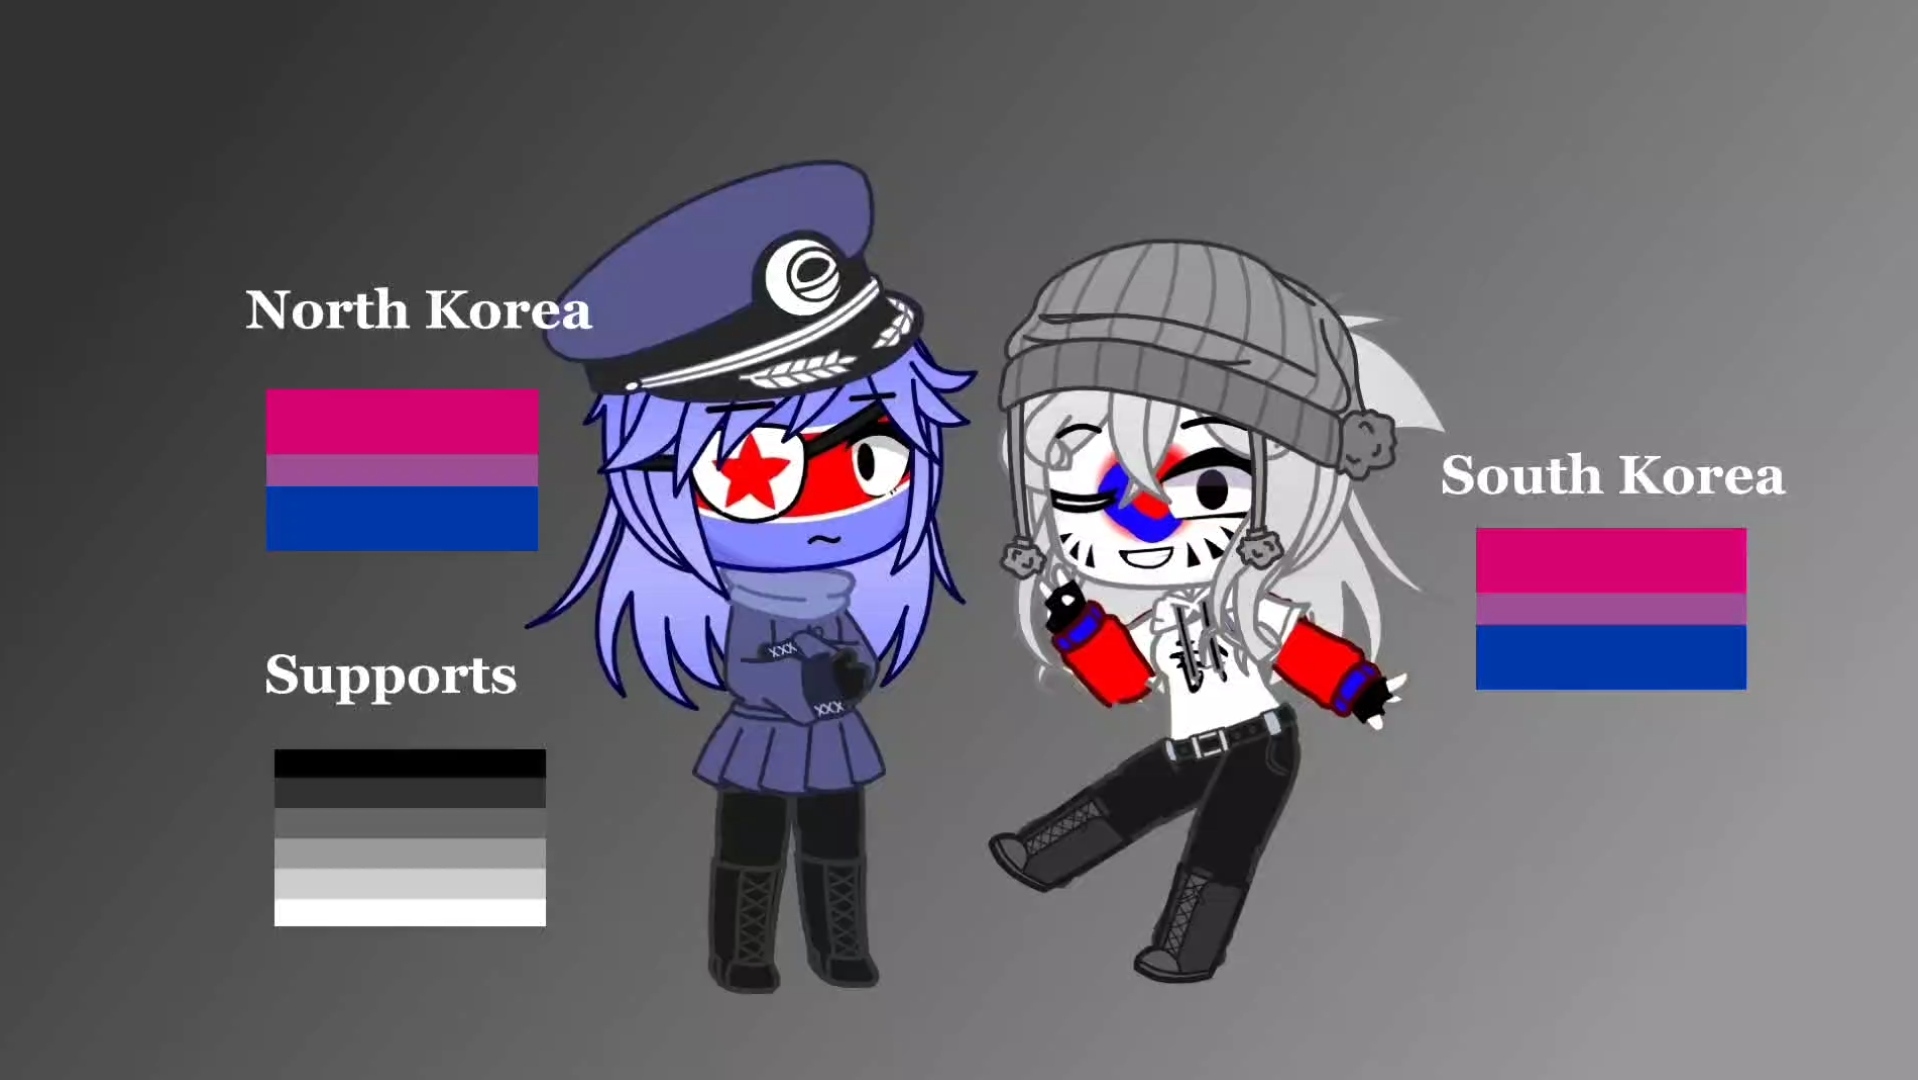 Xxx North Korea - North and South Korea (1 pictures) - Shooshtime